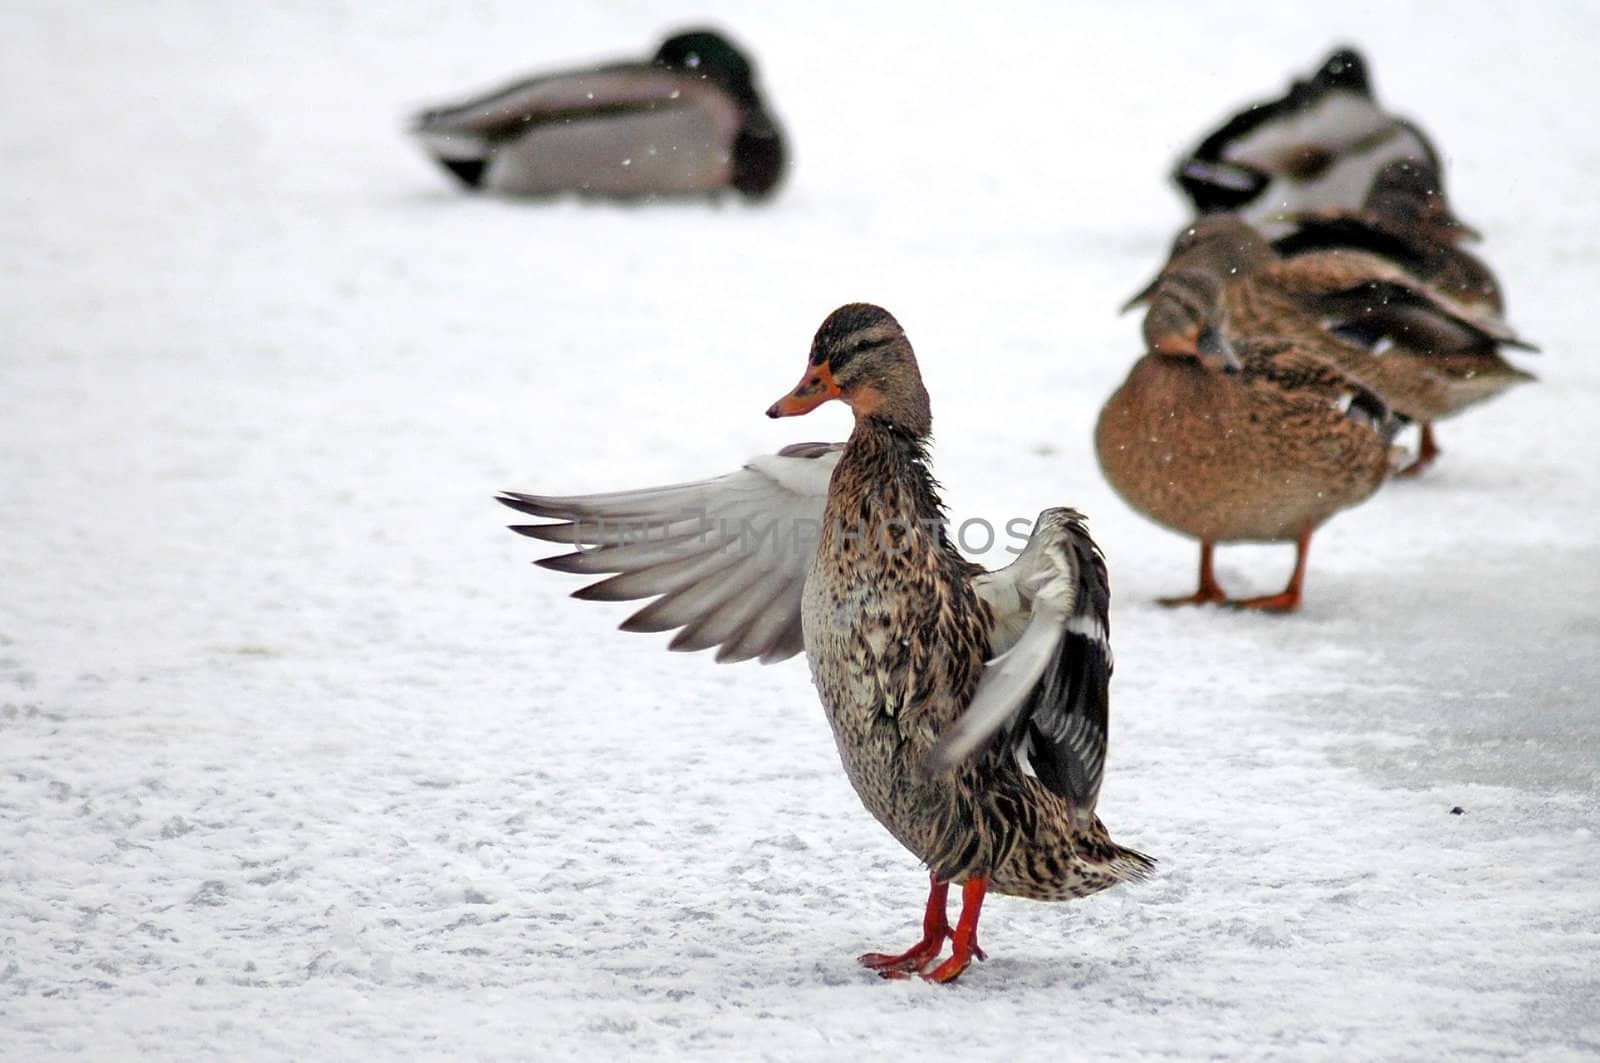 ducks in winter by rorem